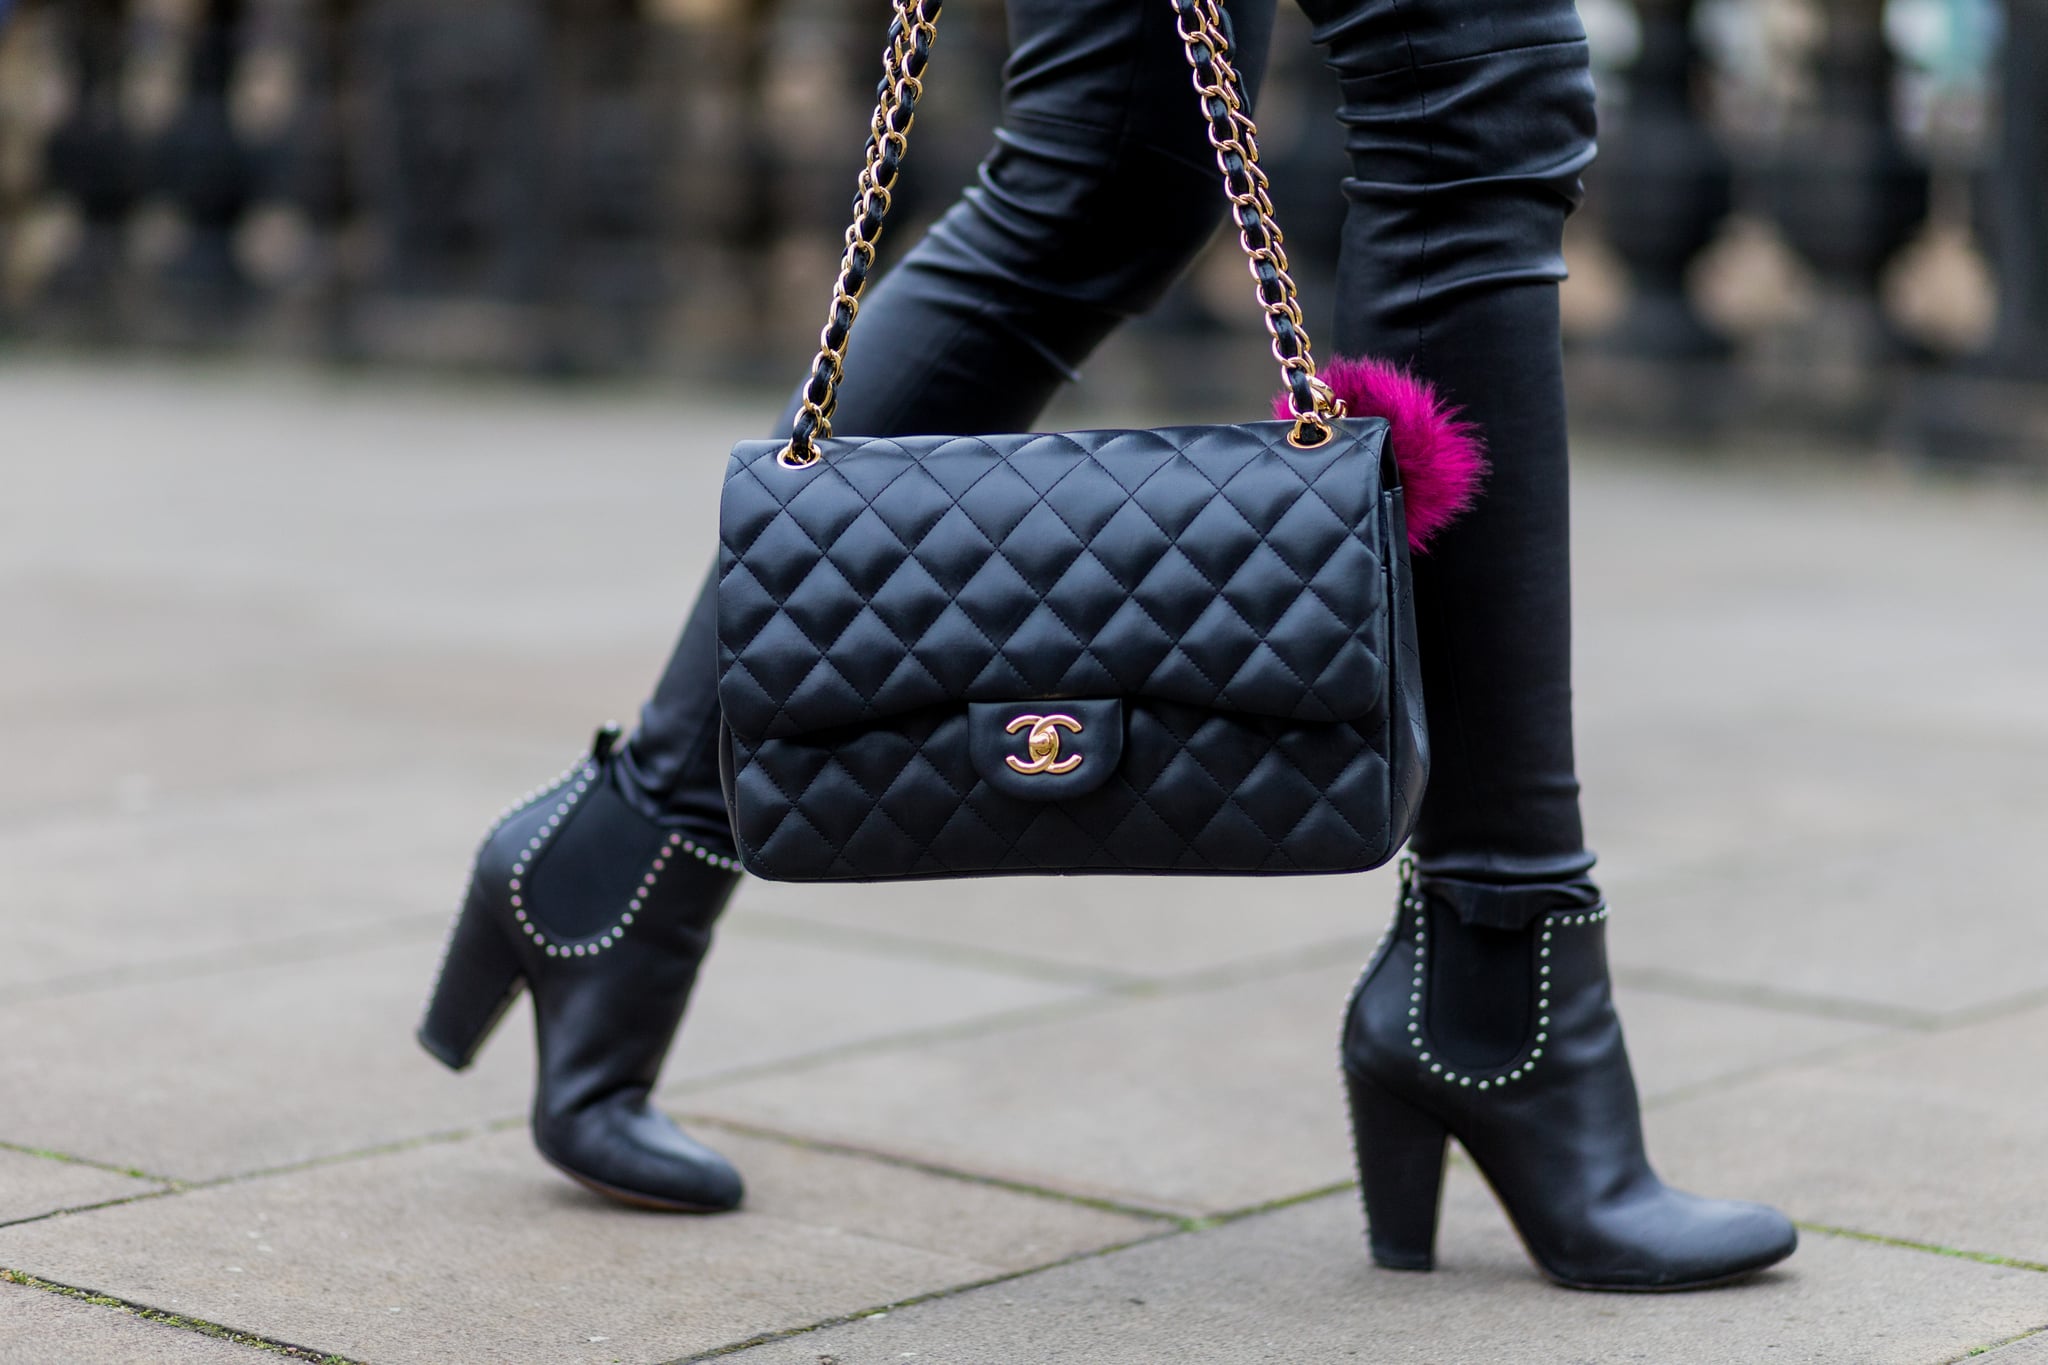 Chanel 2.55, 9 Iconic Handbags Totally Worth the Money